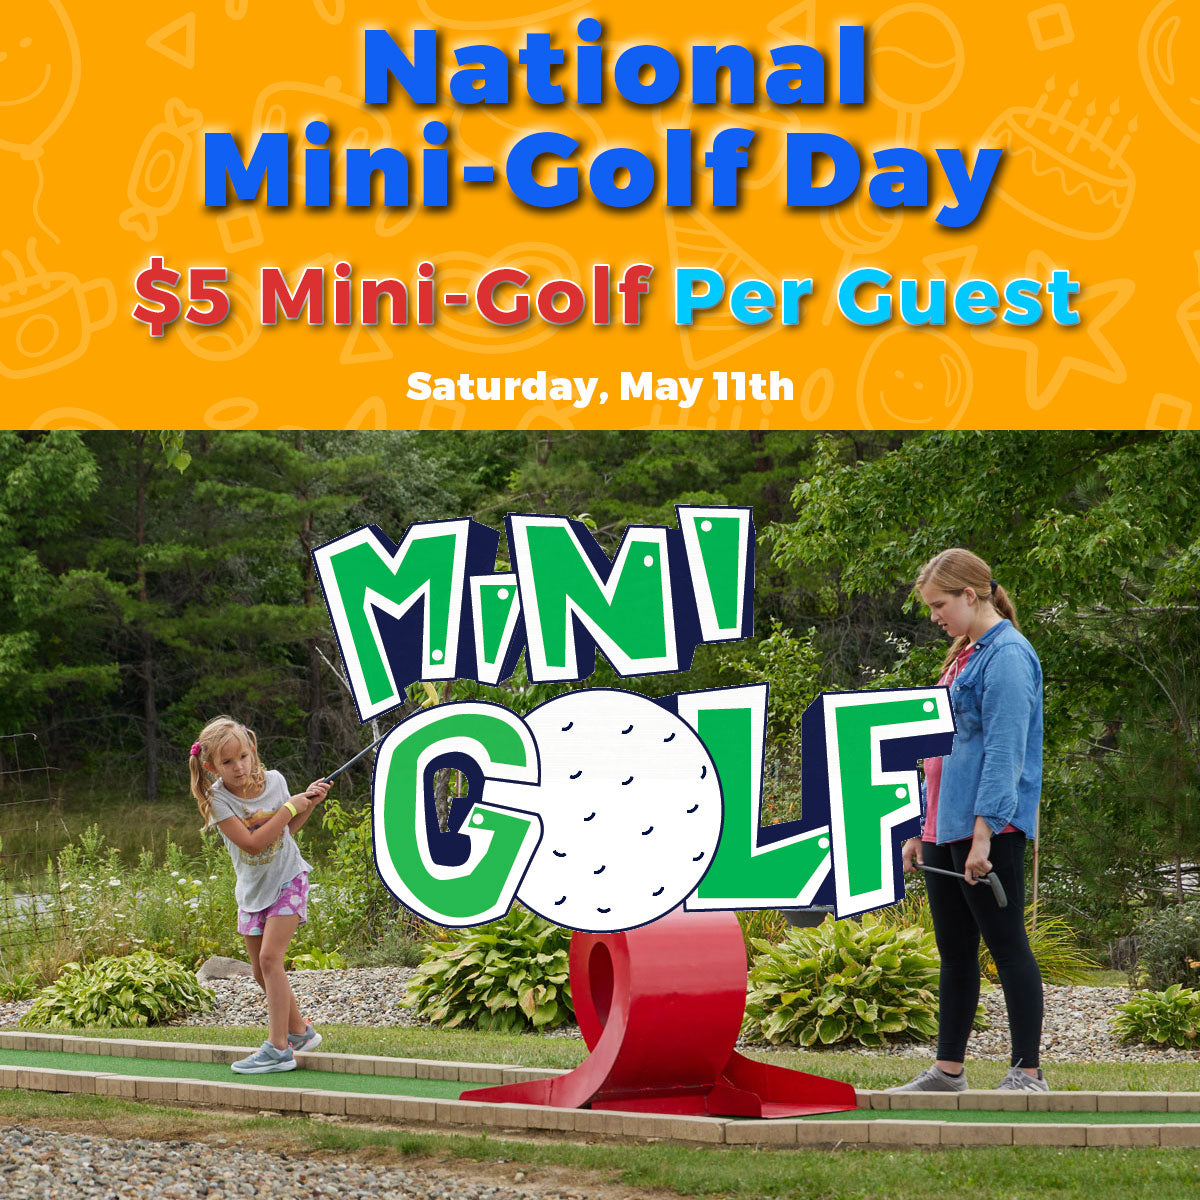 National Mini-Golf Day